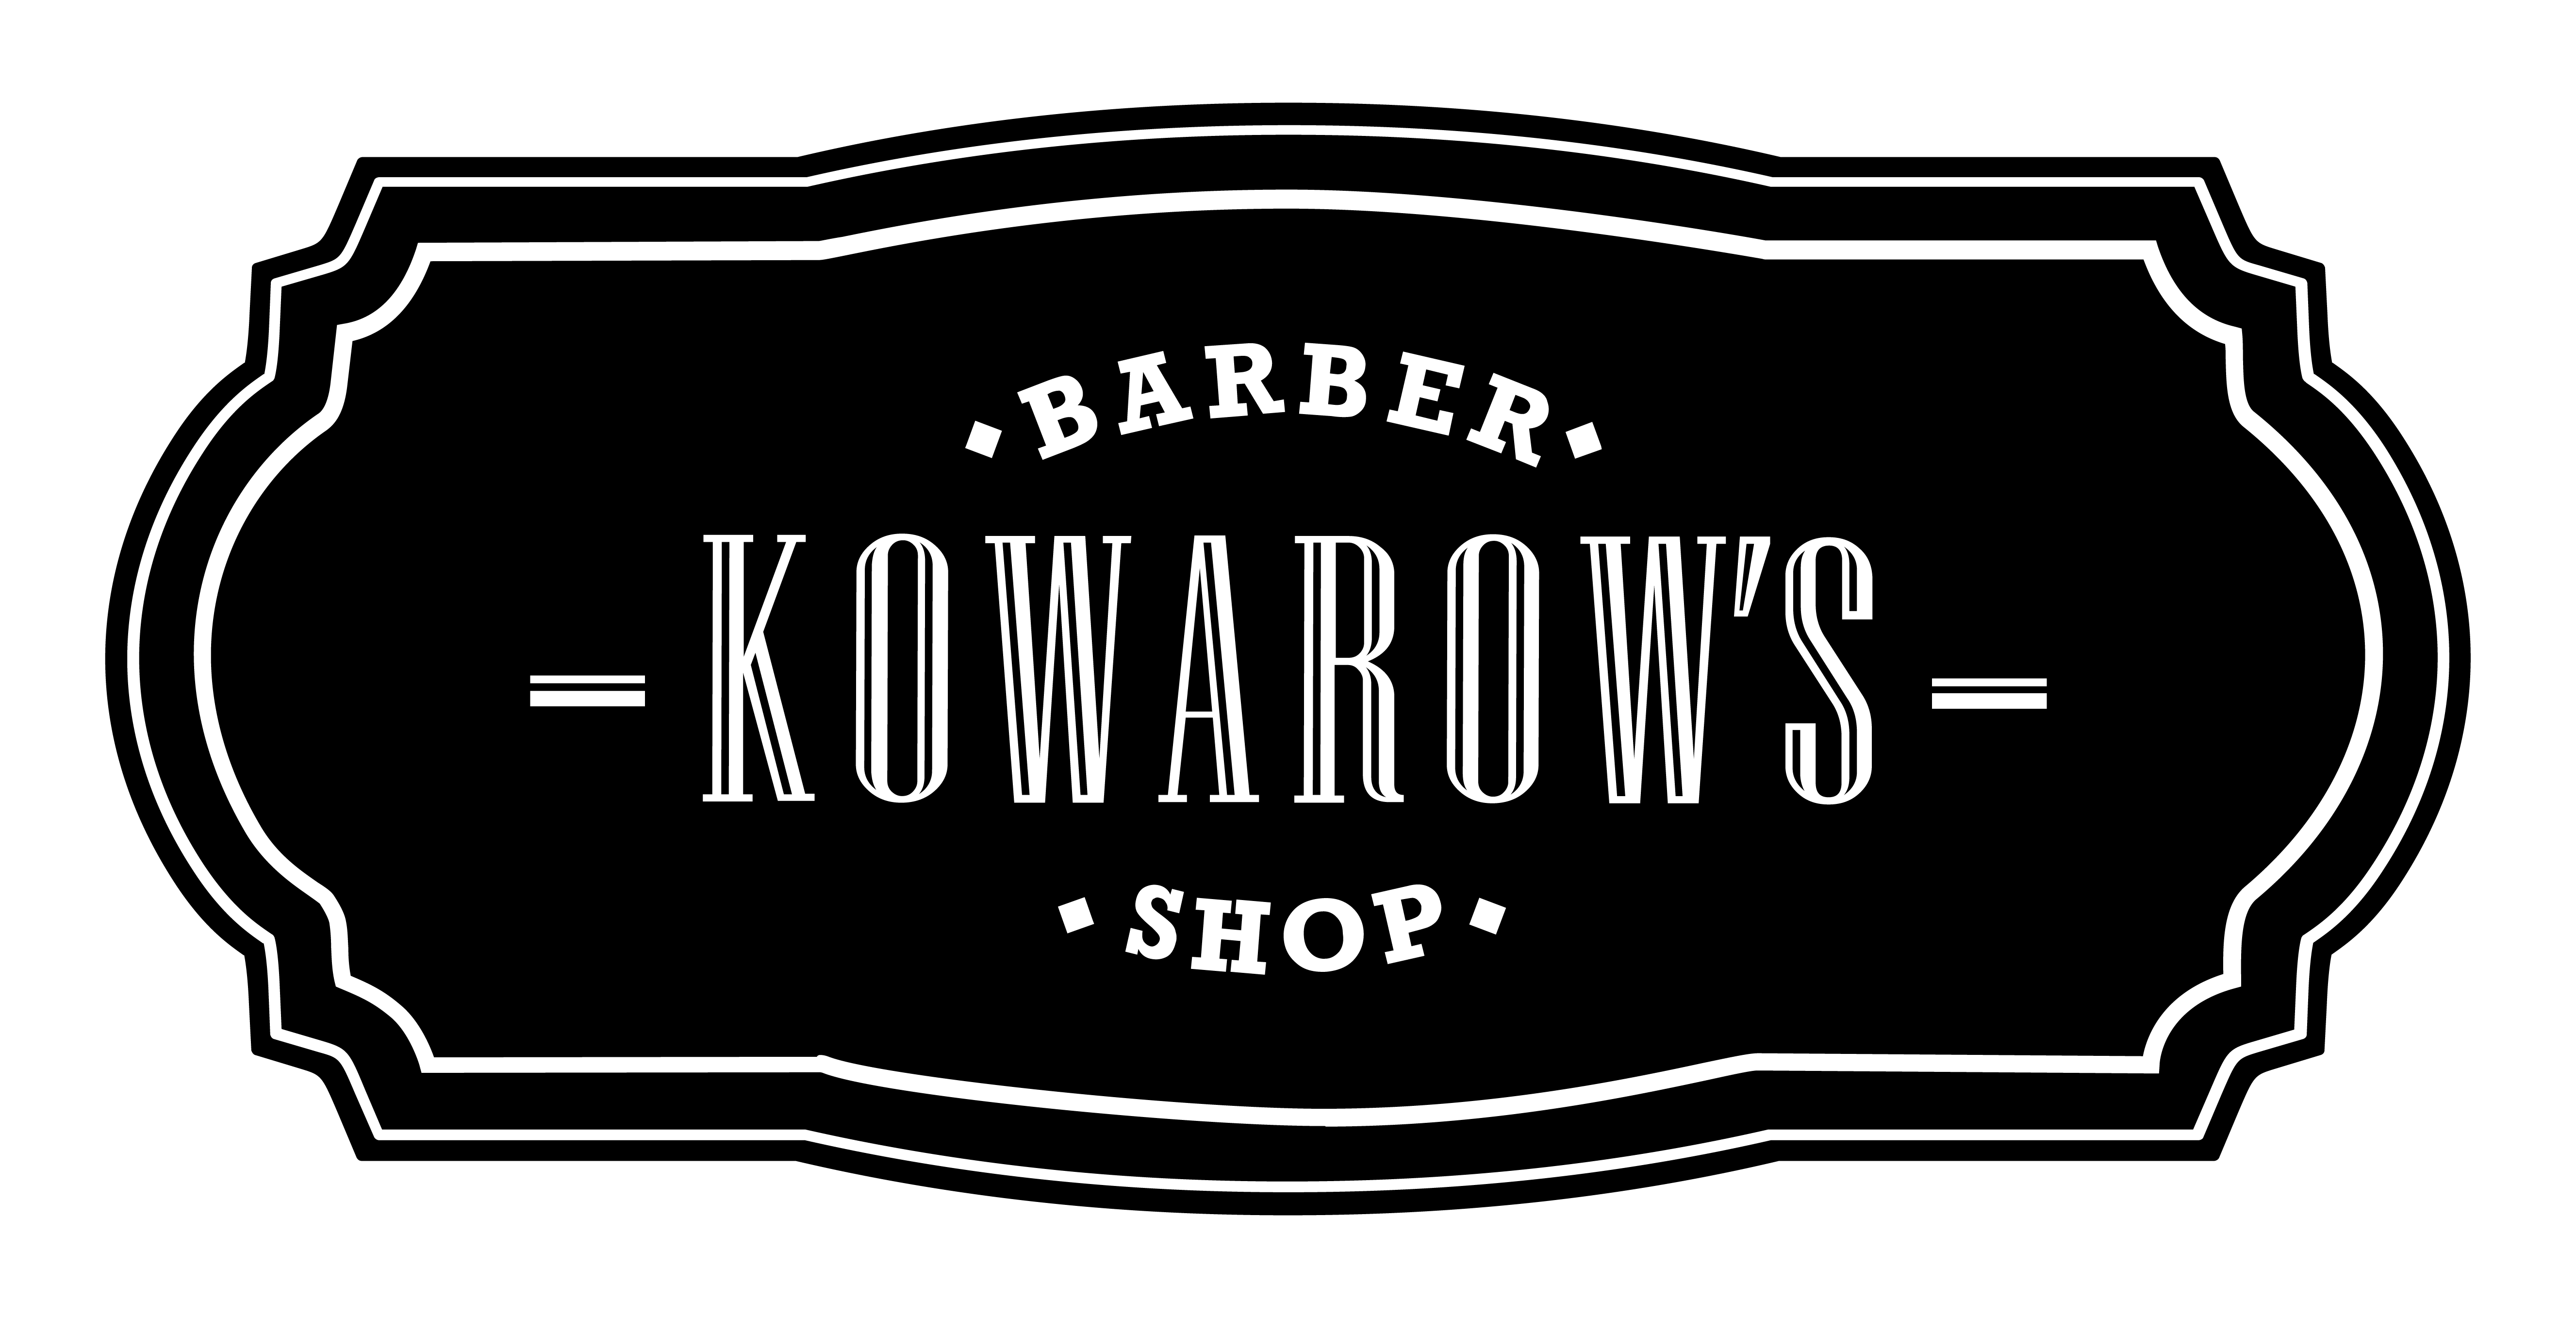 KOWAROW'S Barbershop